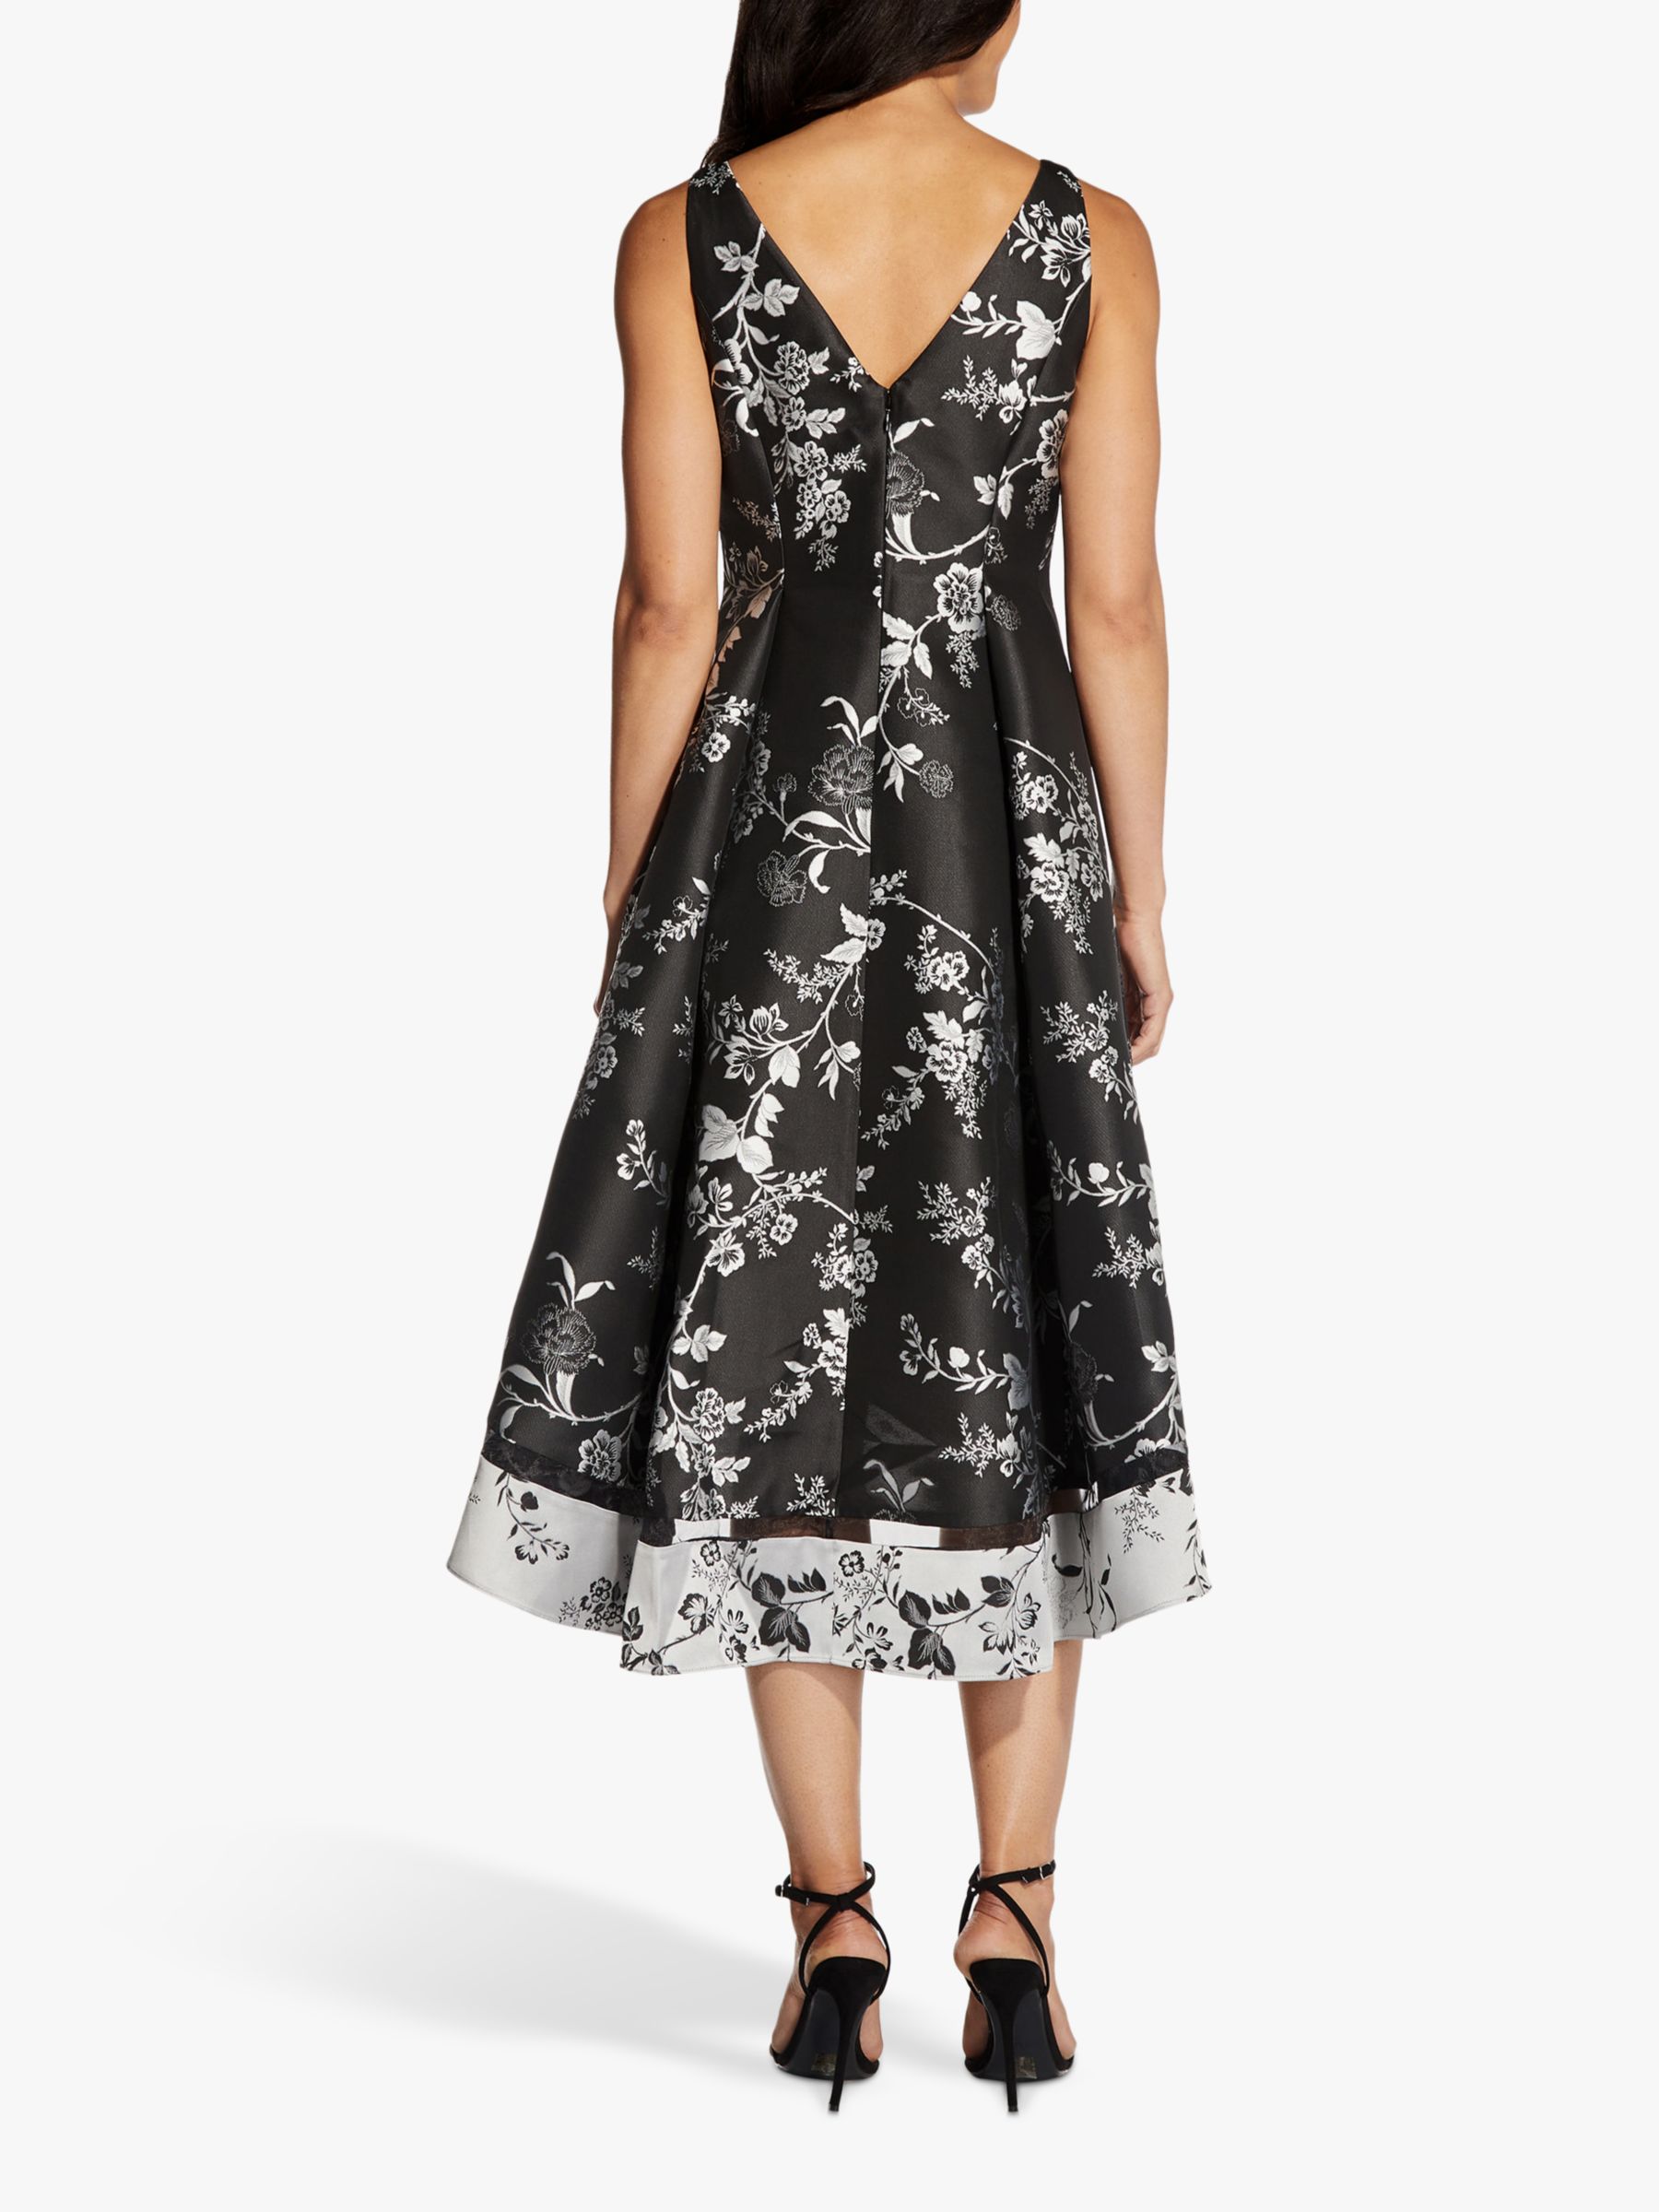 Adrianna Papell Brocade Floral Midi Dress, Black/Silver